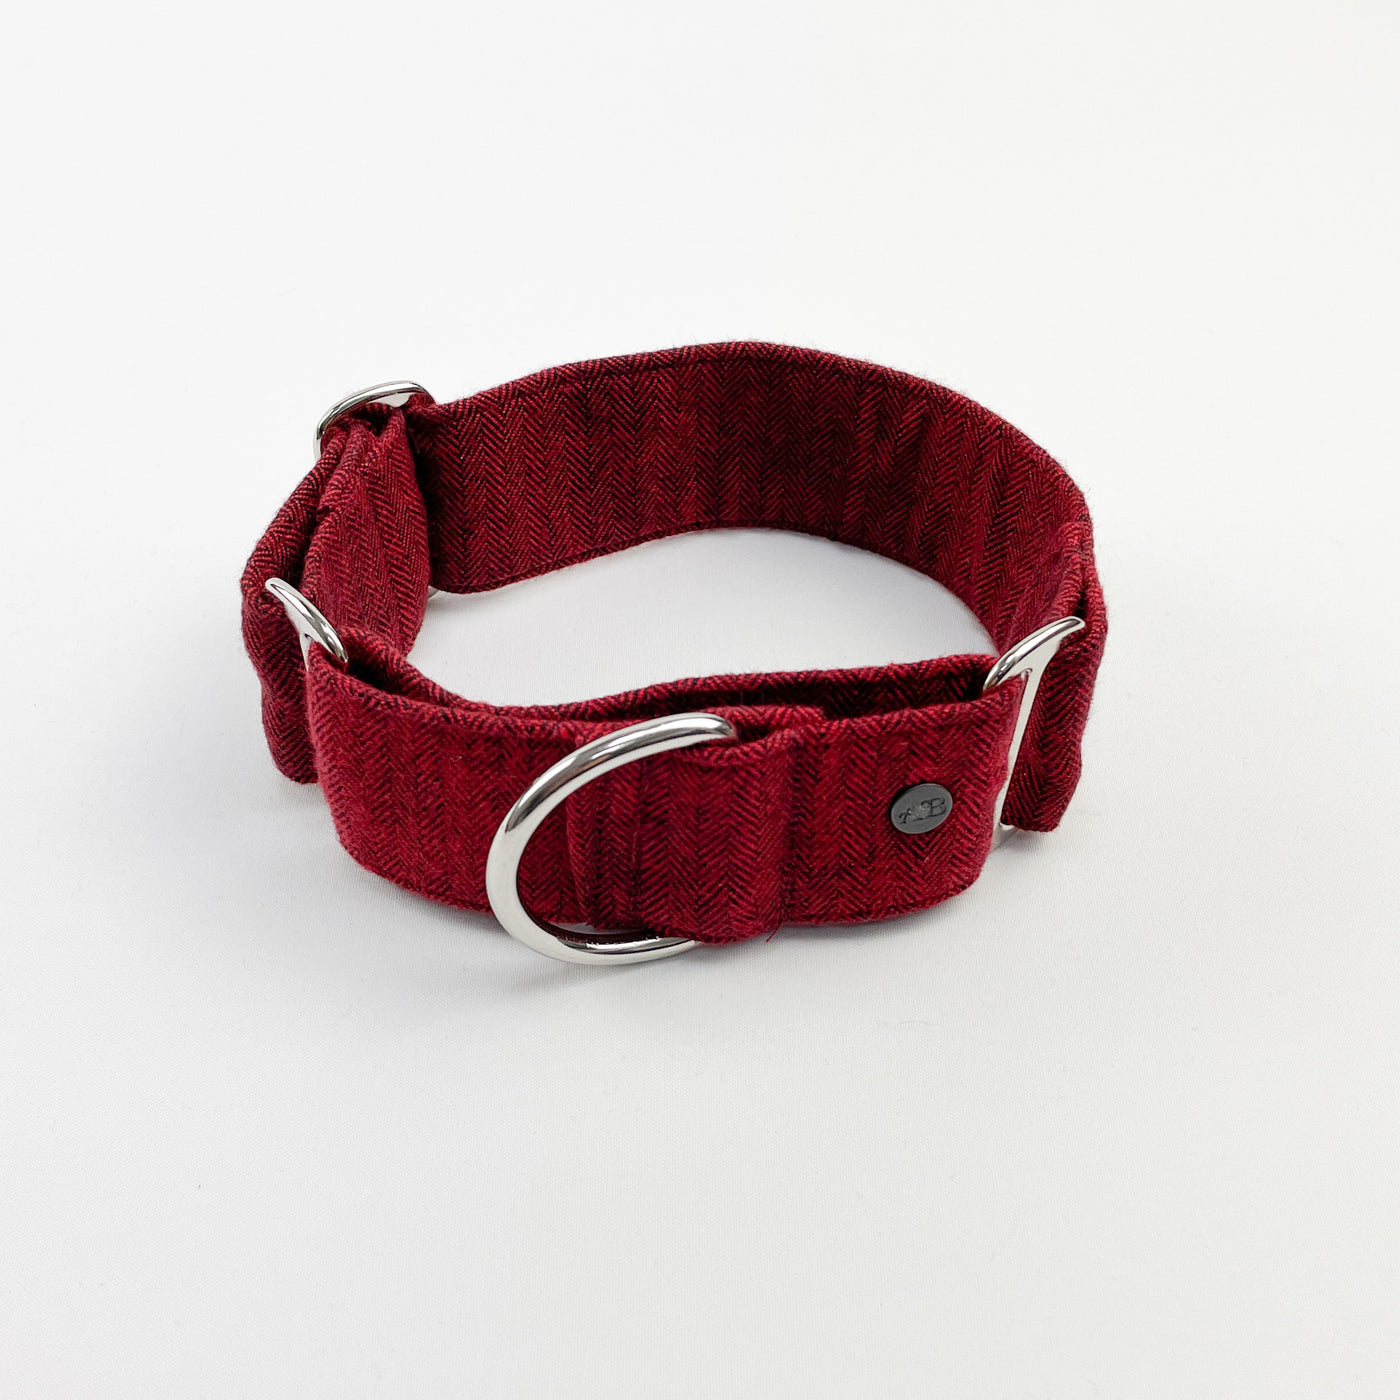 Cranberry herringbone martingale collar